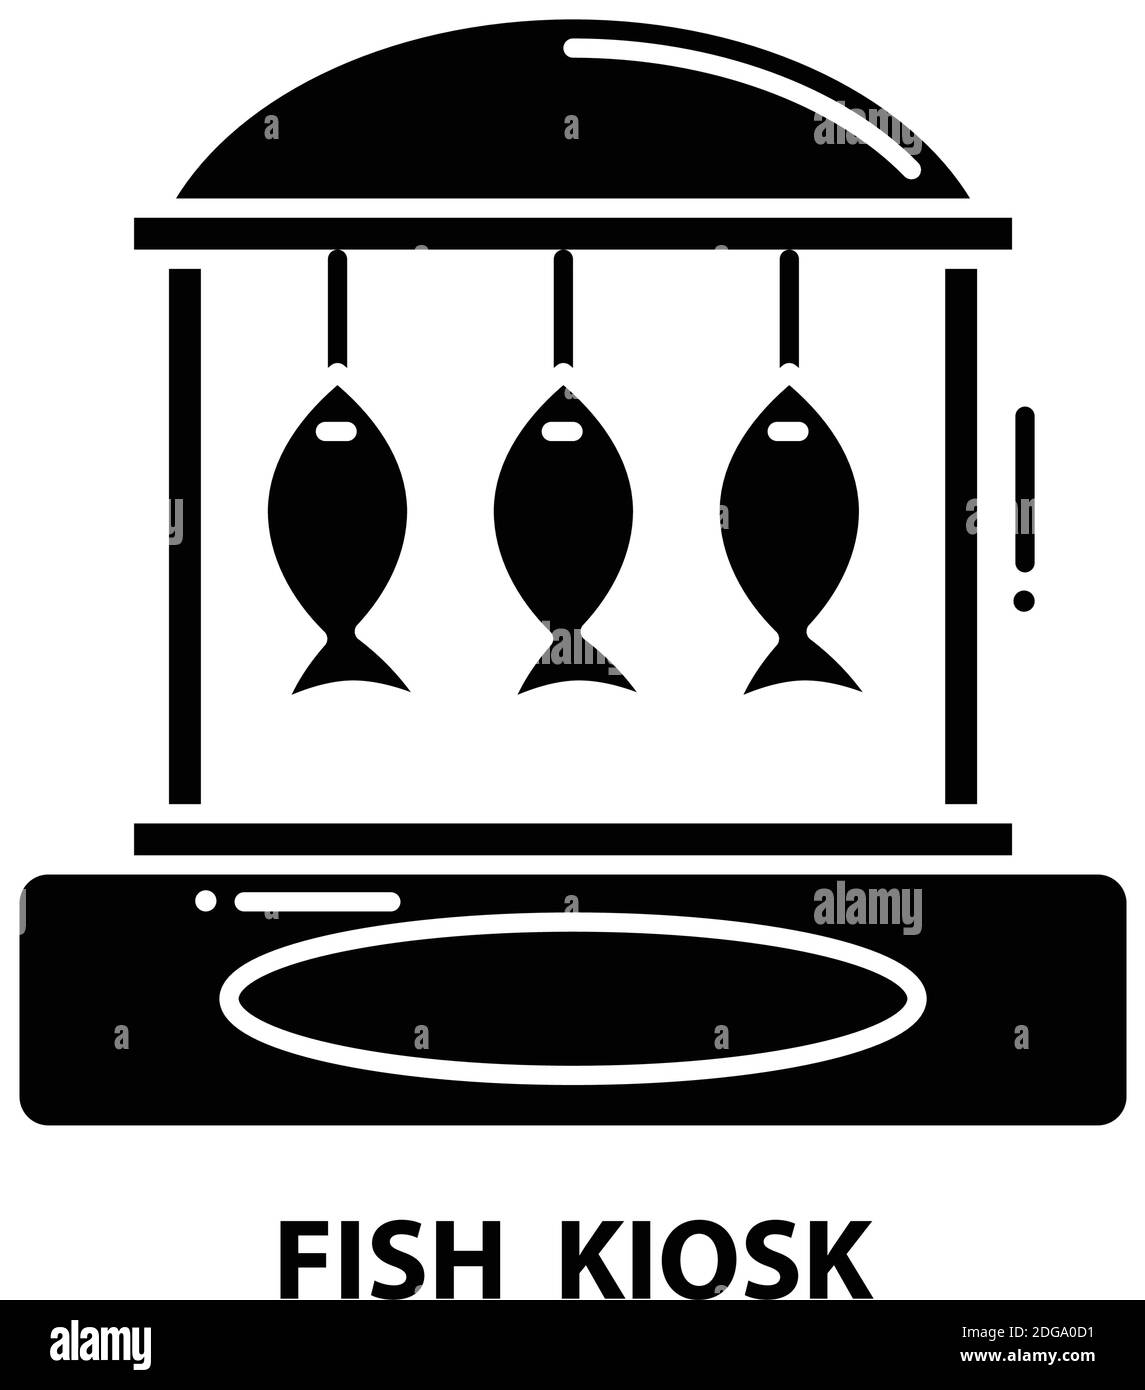 fish kiosk icon, black vector sign with editable strokes, concept illustration Stock Vector